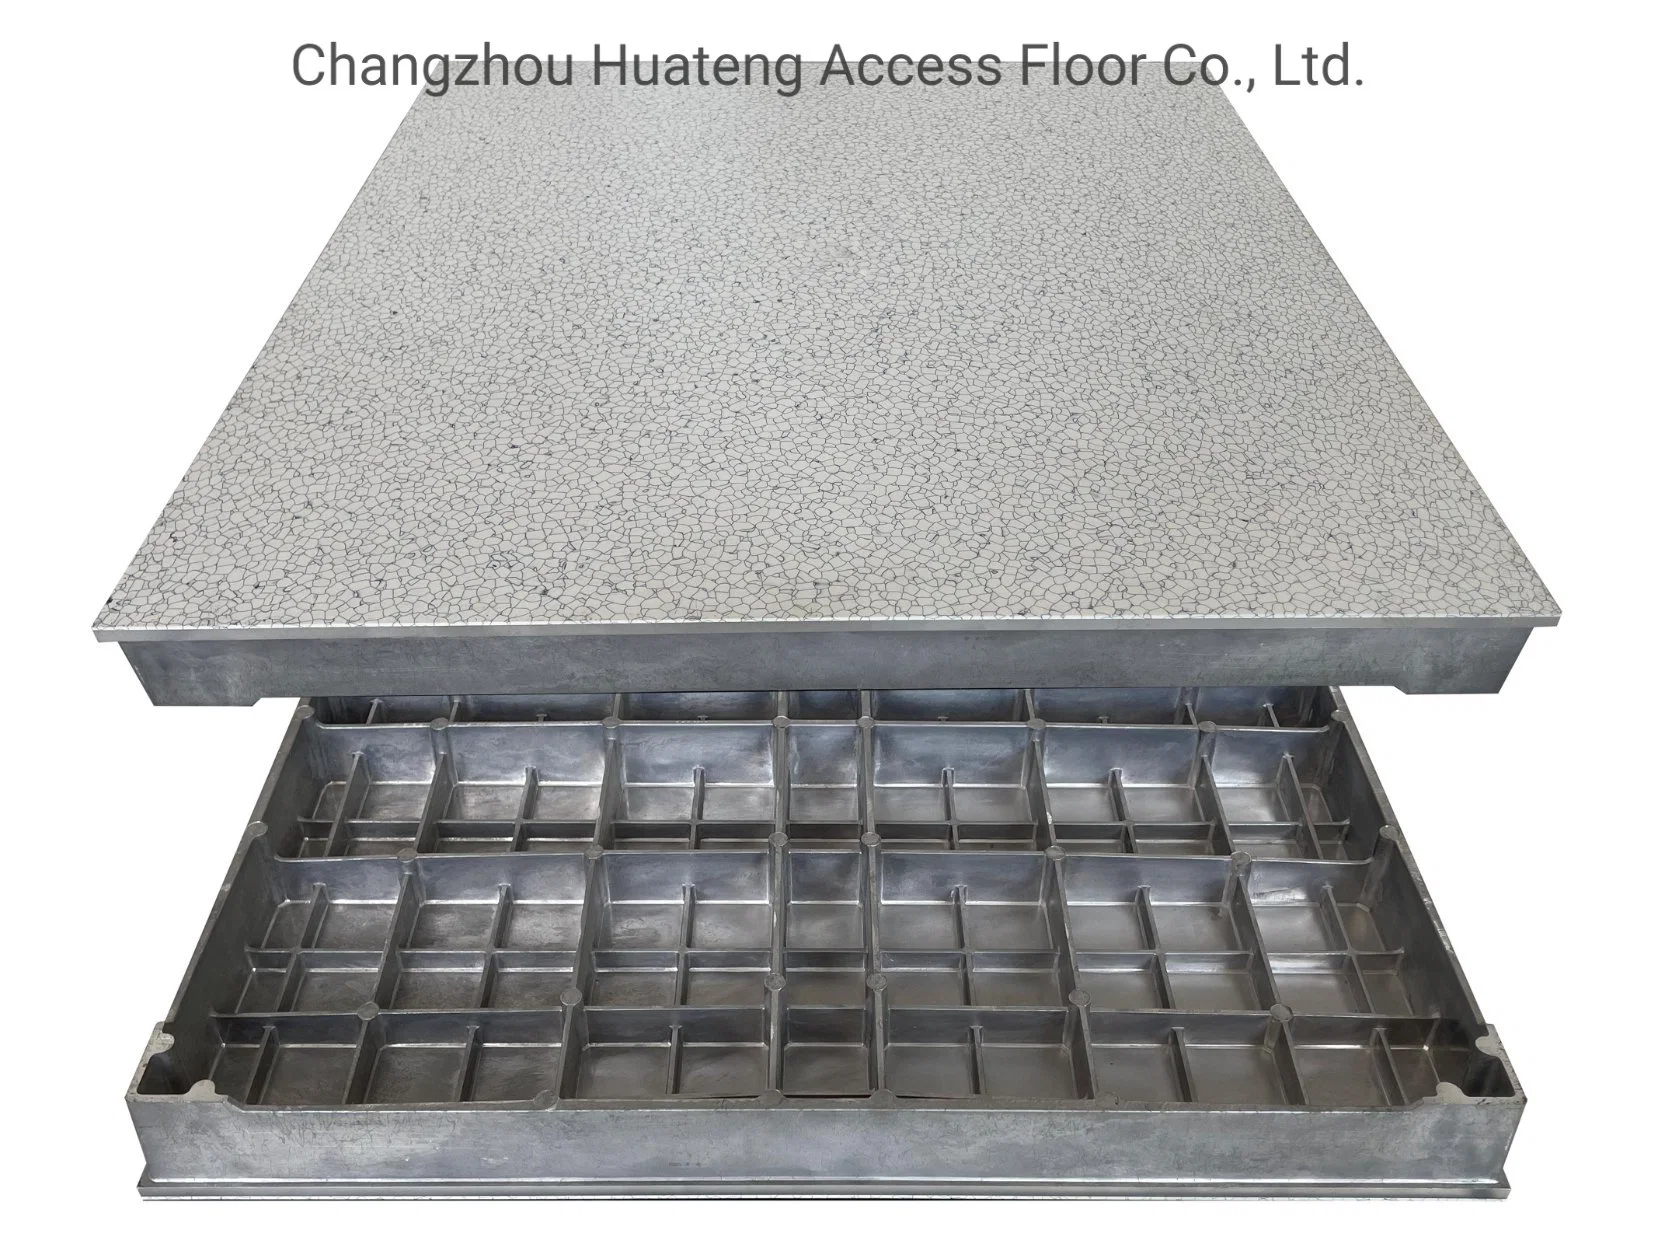 600mm Building Material Aluminum Access Floor Tile for